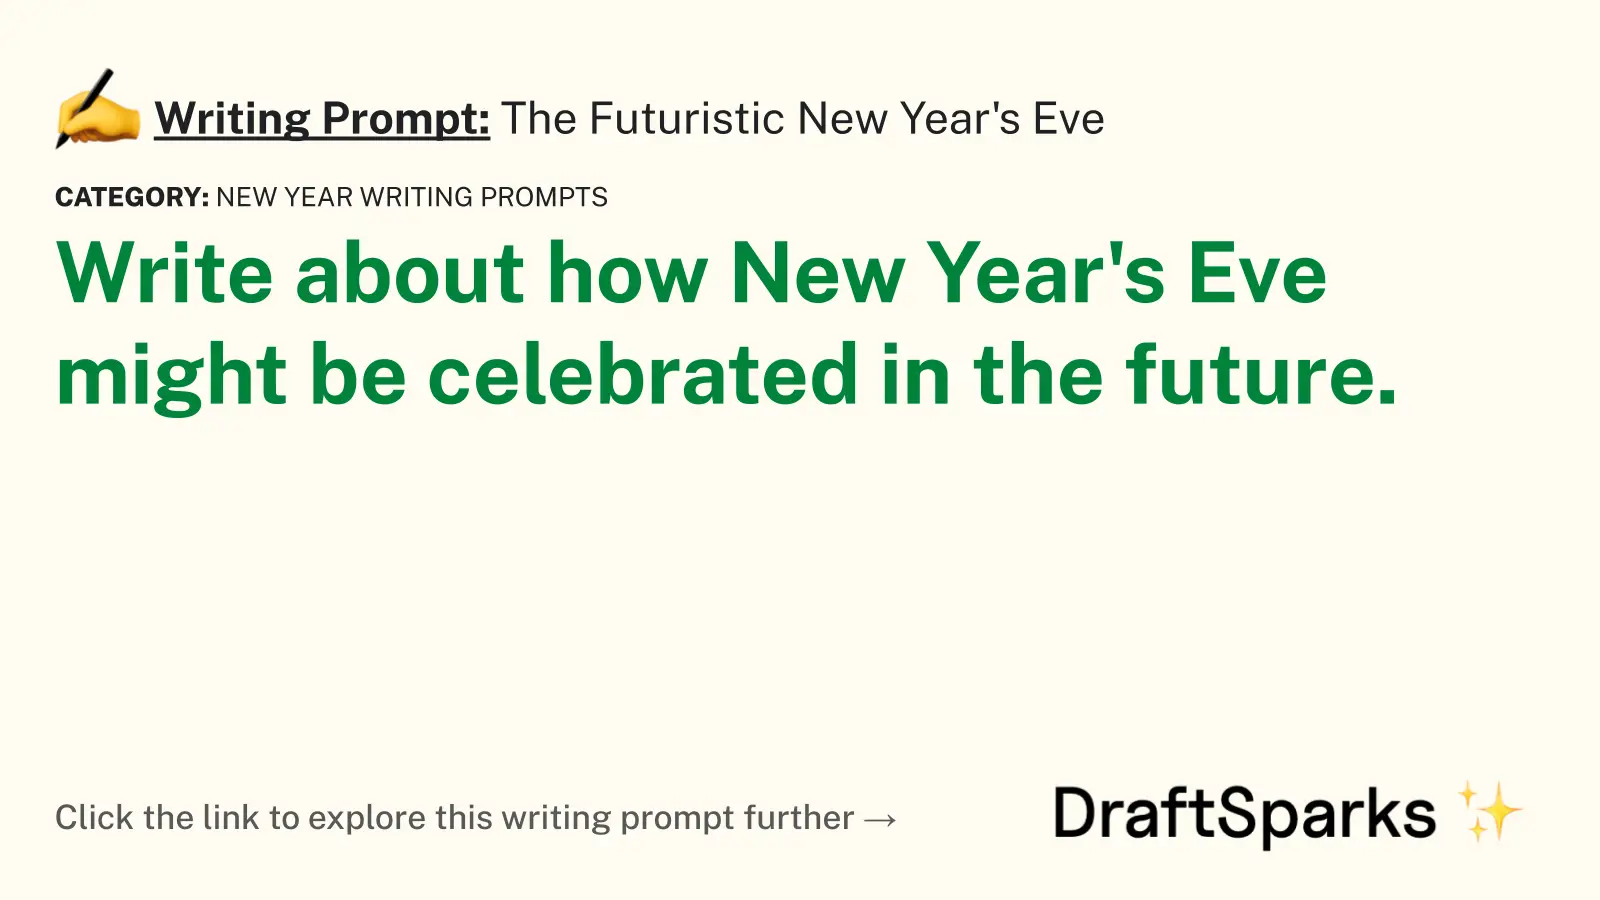 The Futuristic New Year’s Eve